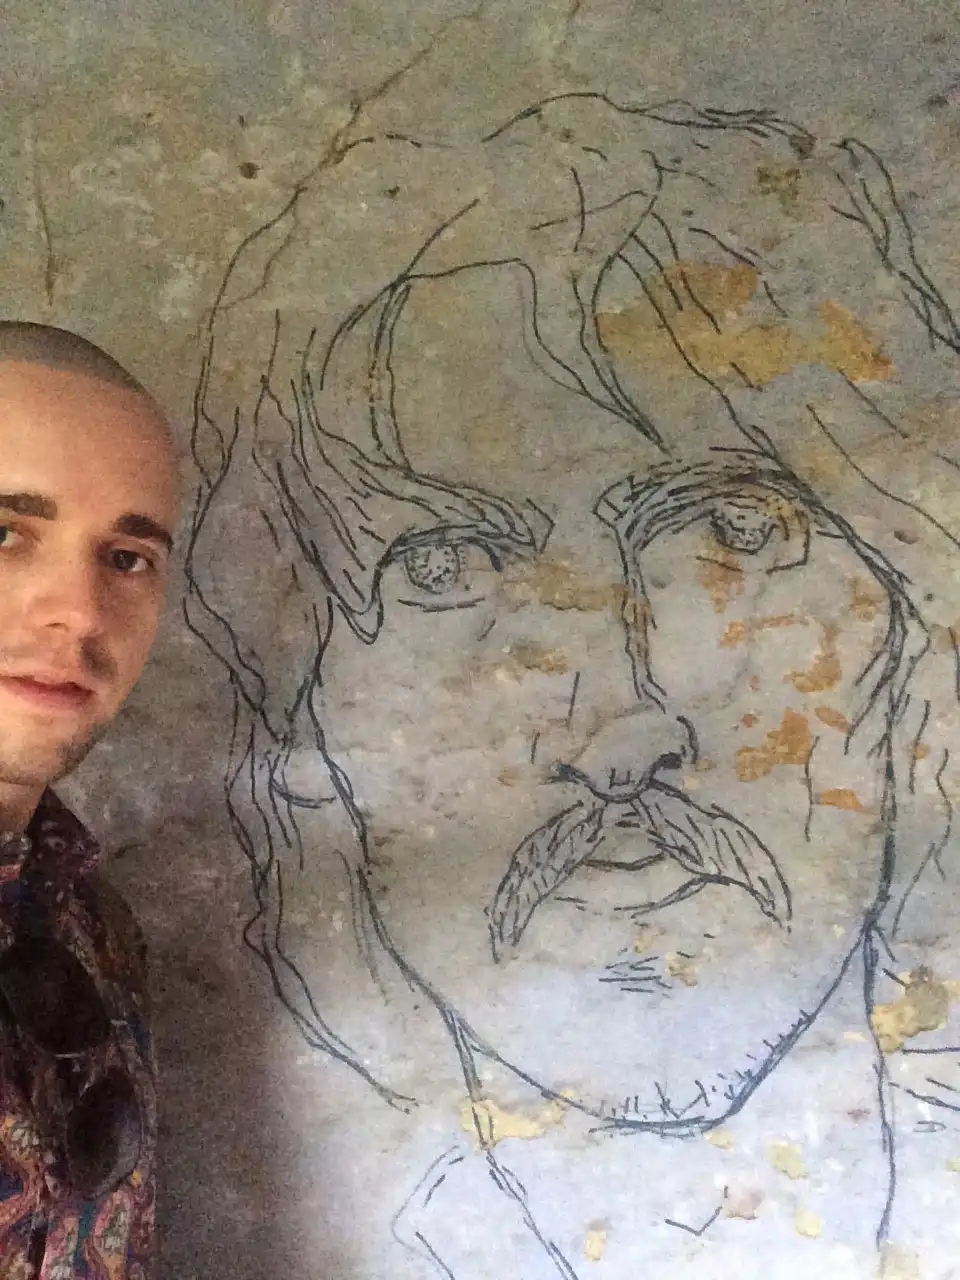 Kerwin in Rishikesh, India at the Beatles ashram | George Harrison graffiti